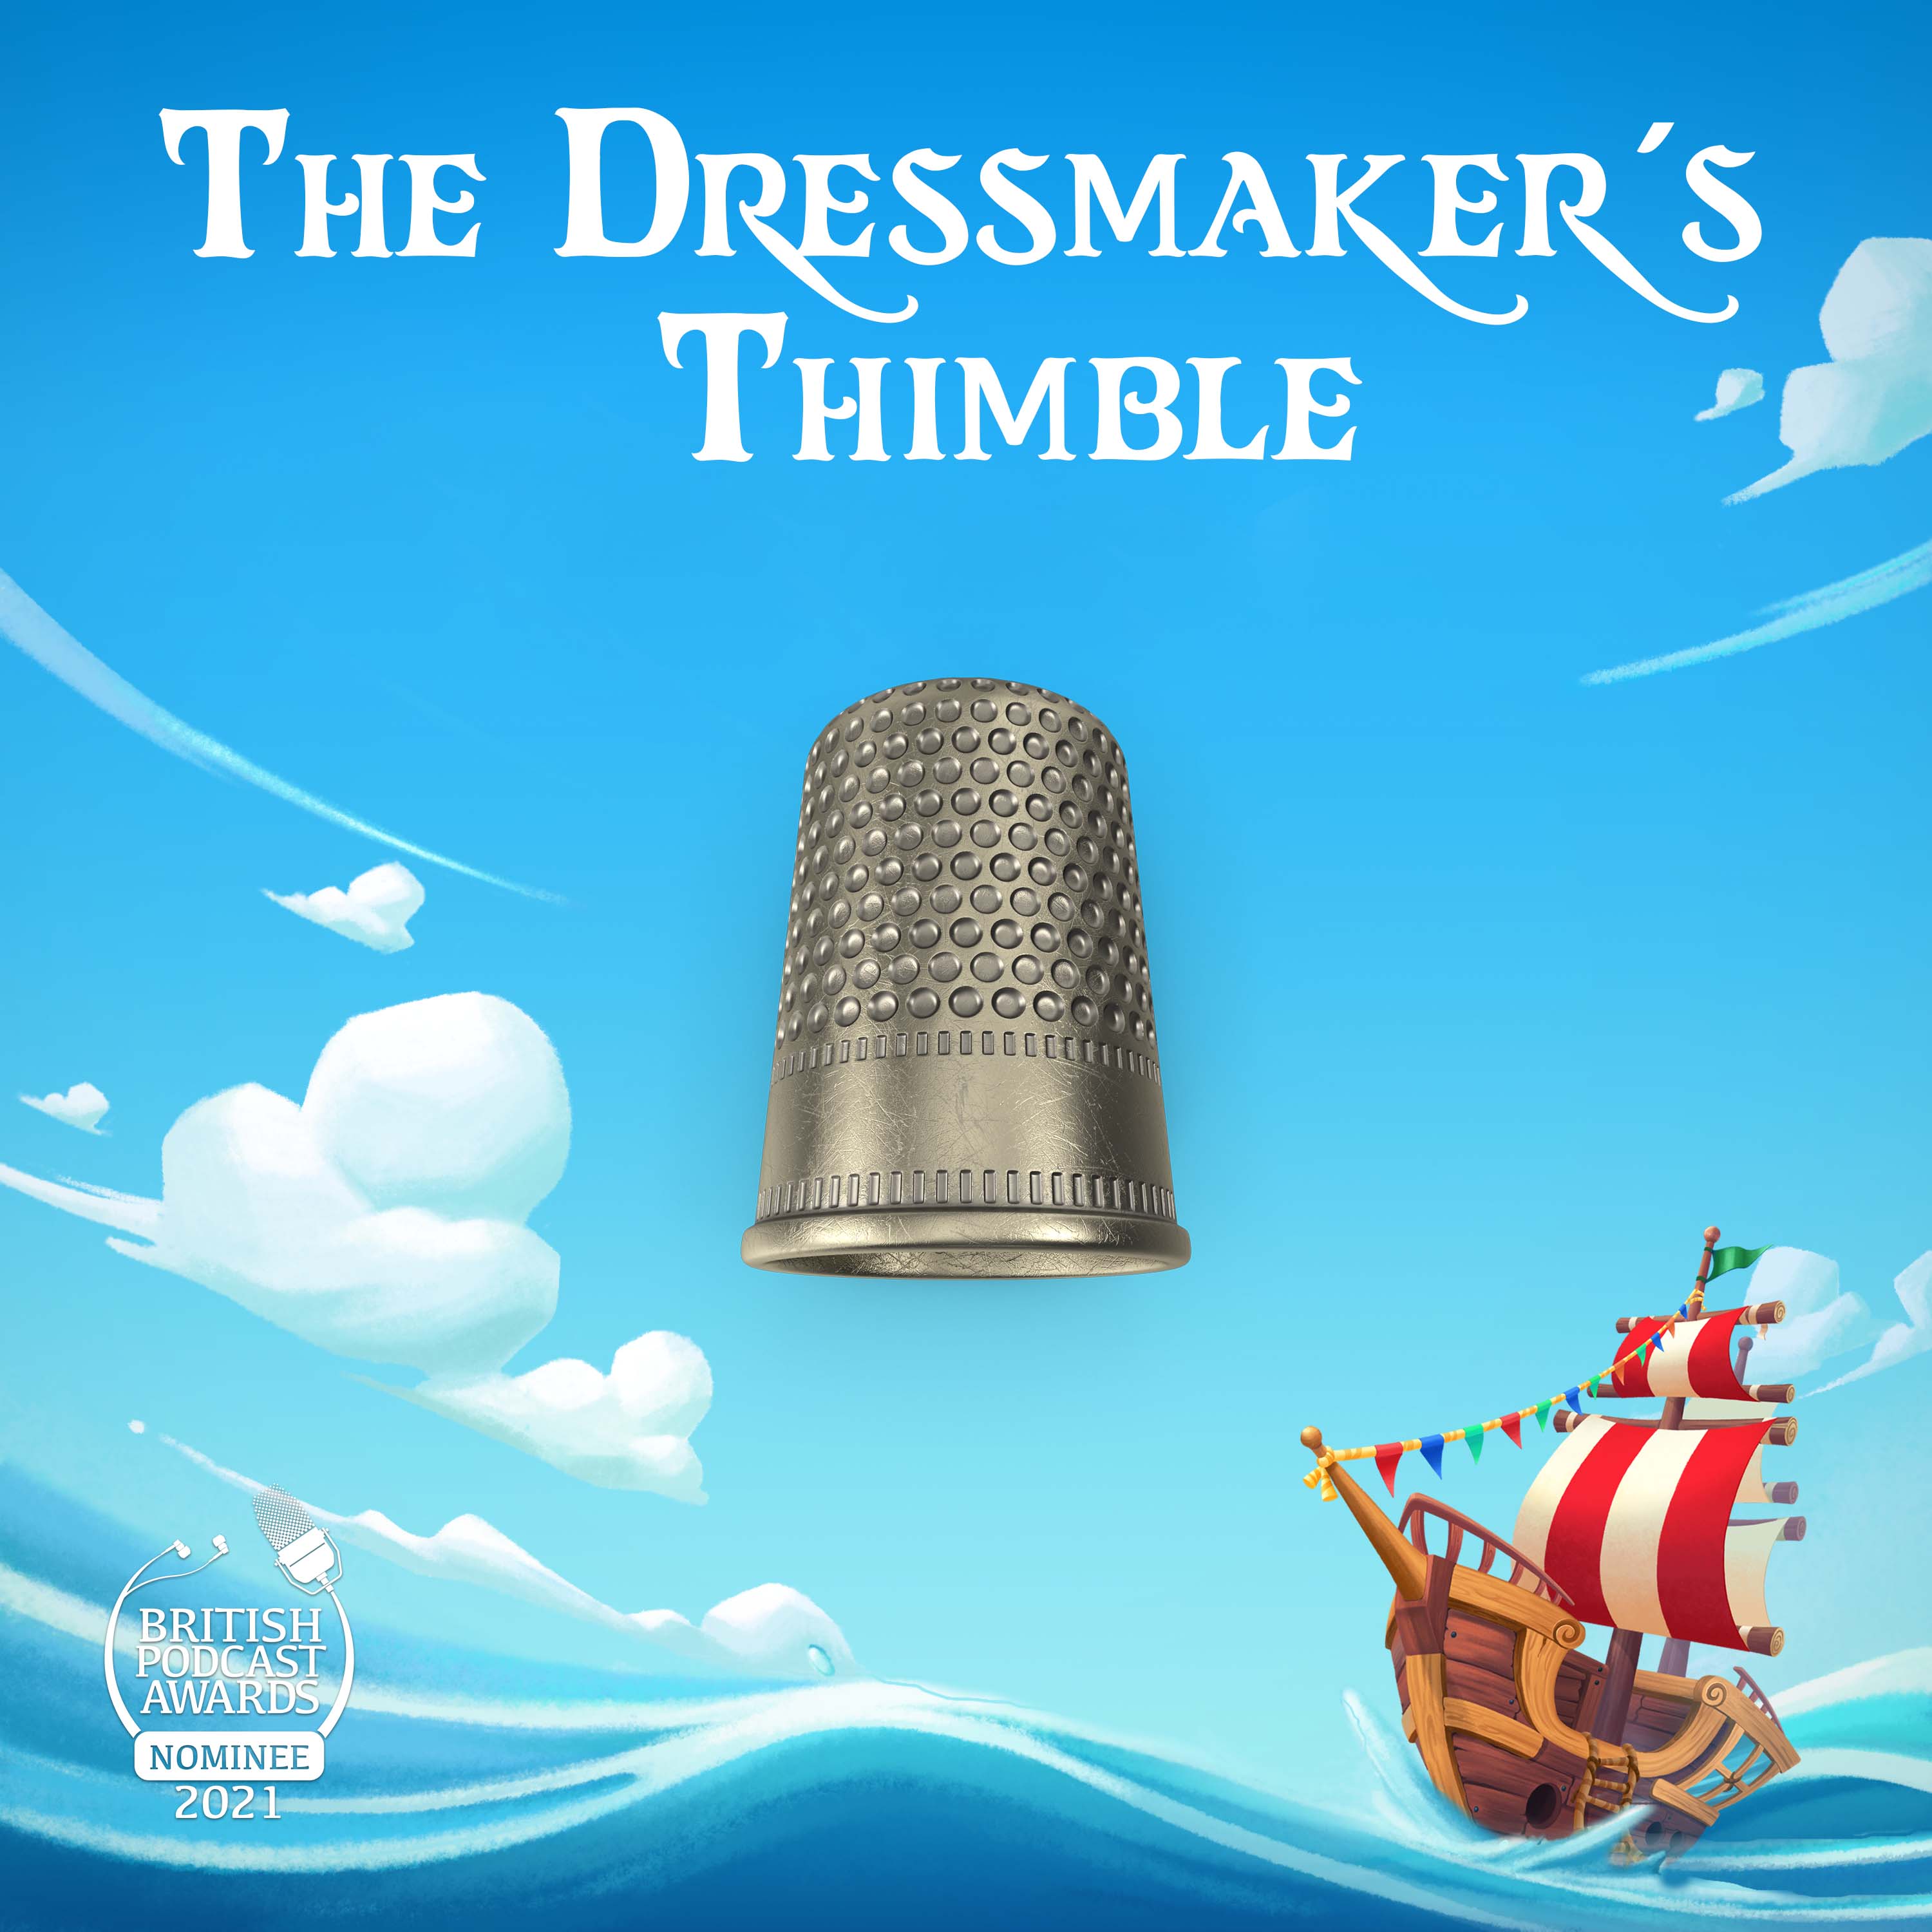 The Dressmaker's Thimble